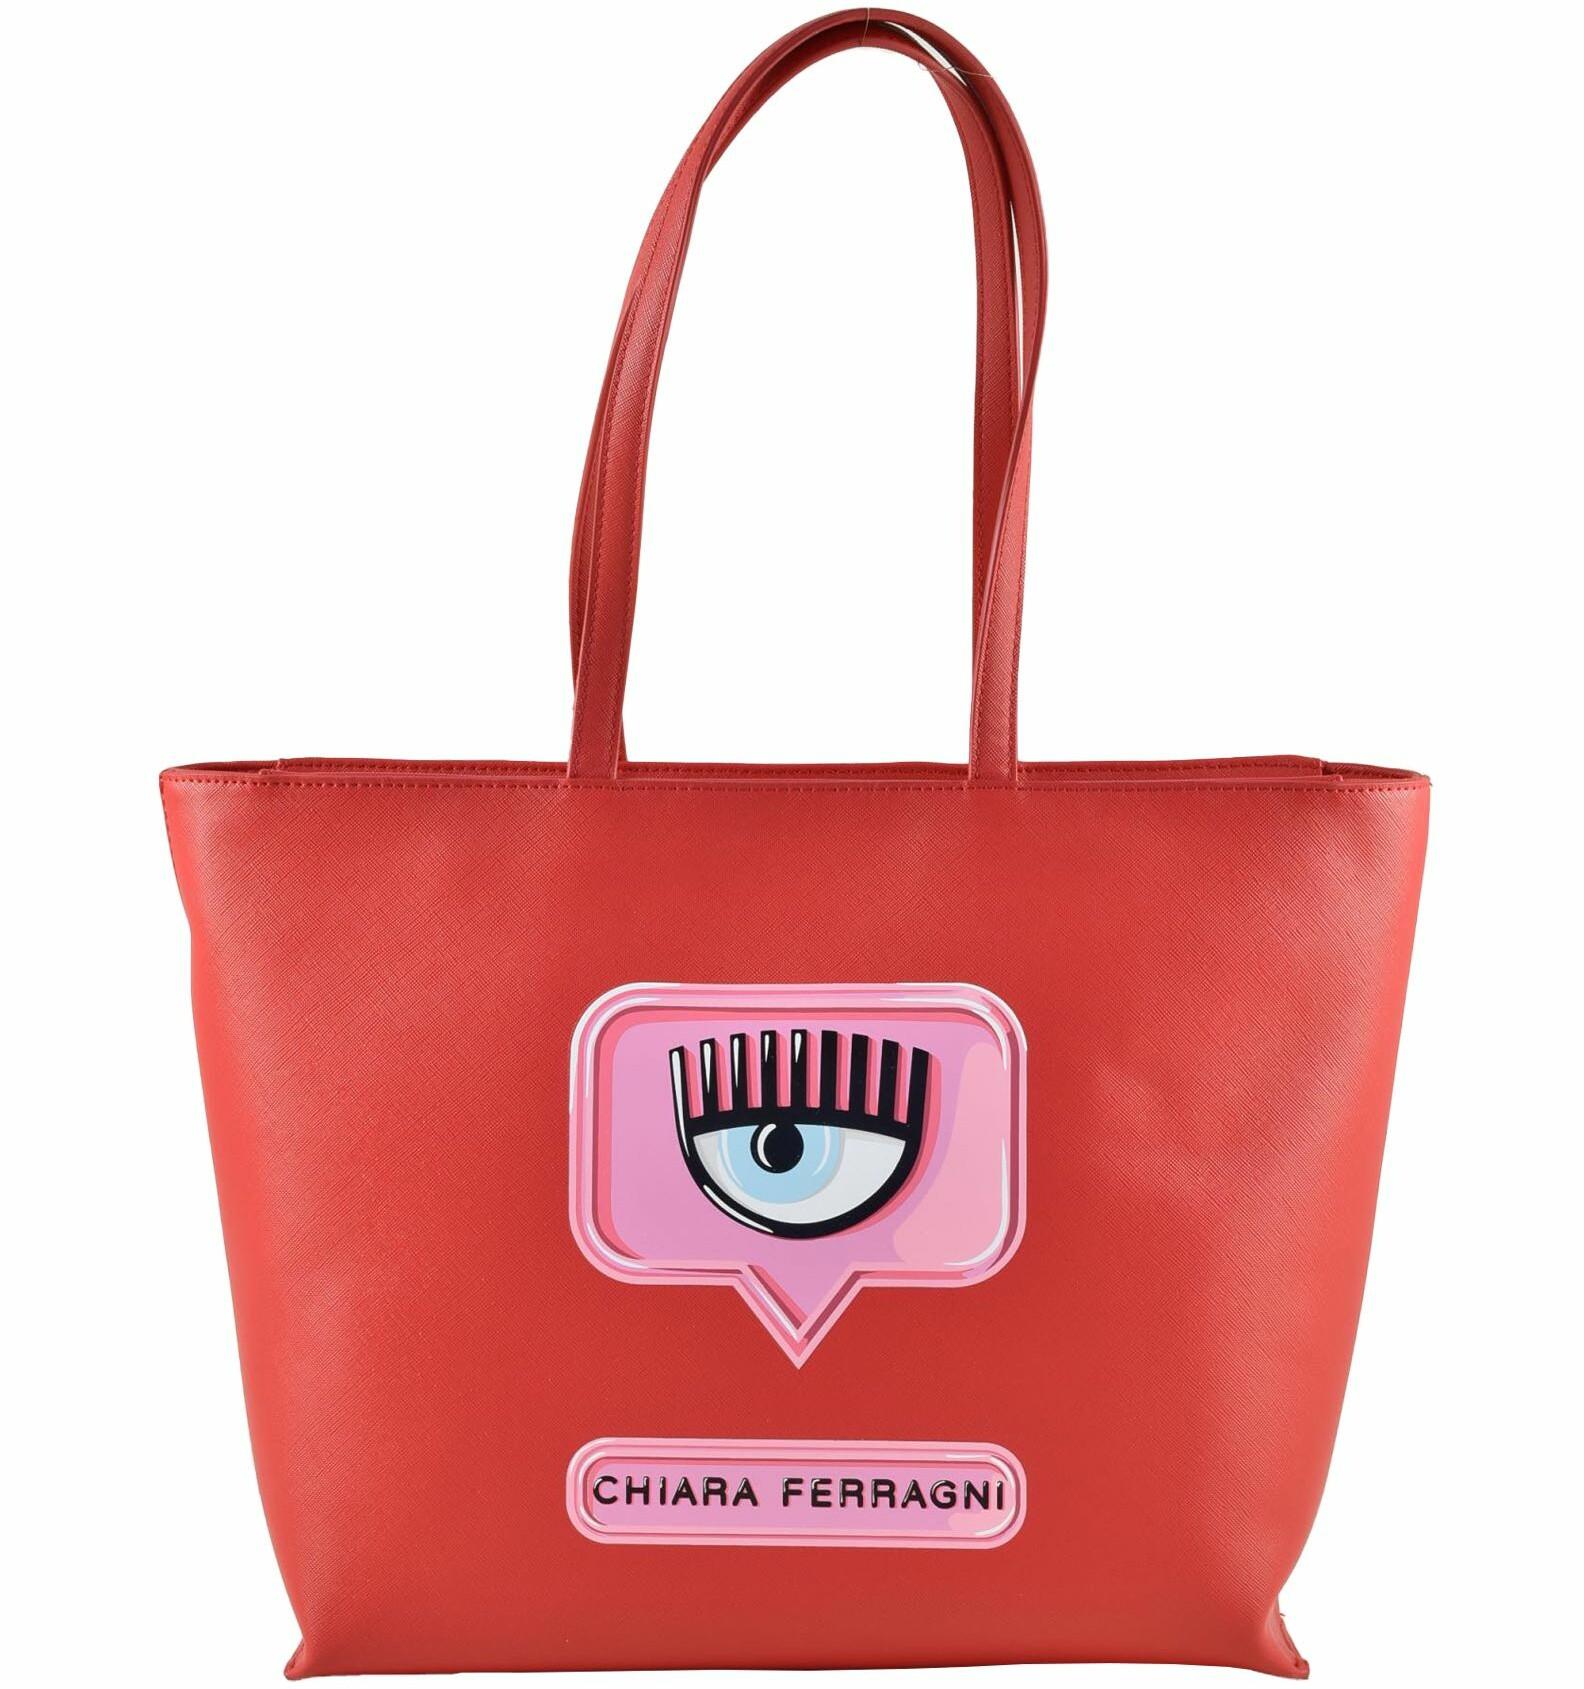 Chiara Ferragni Women's Red Handbag at FORZIERI